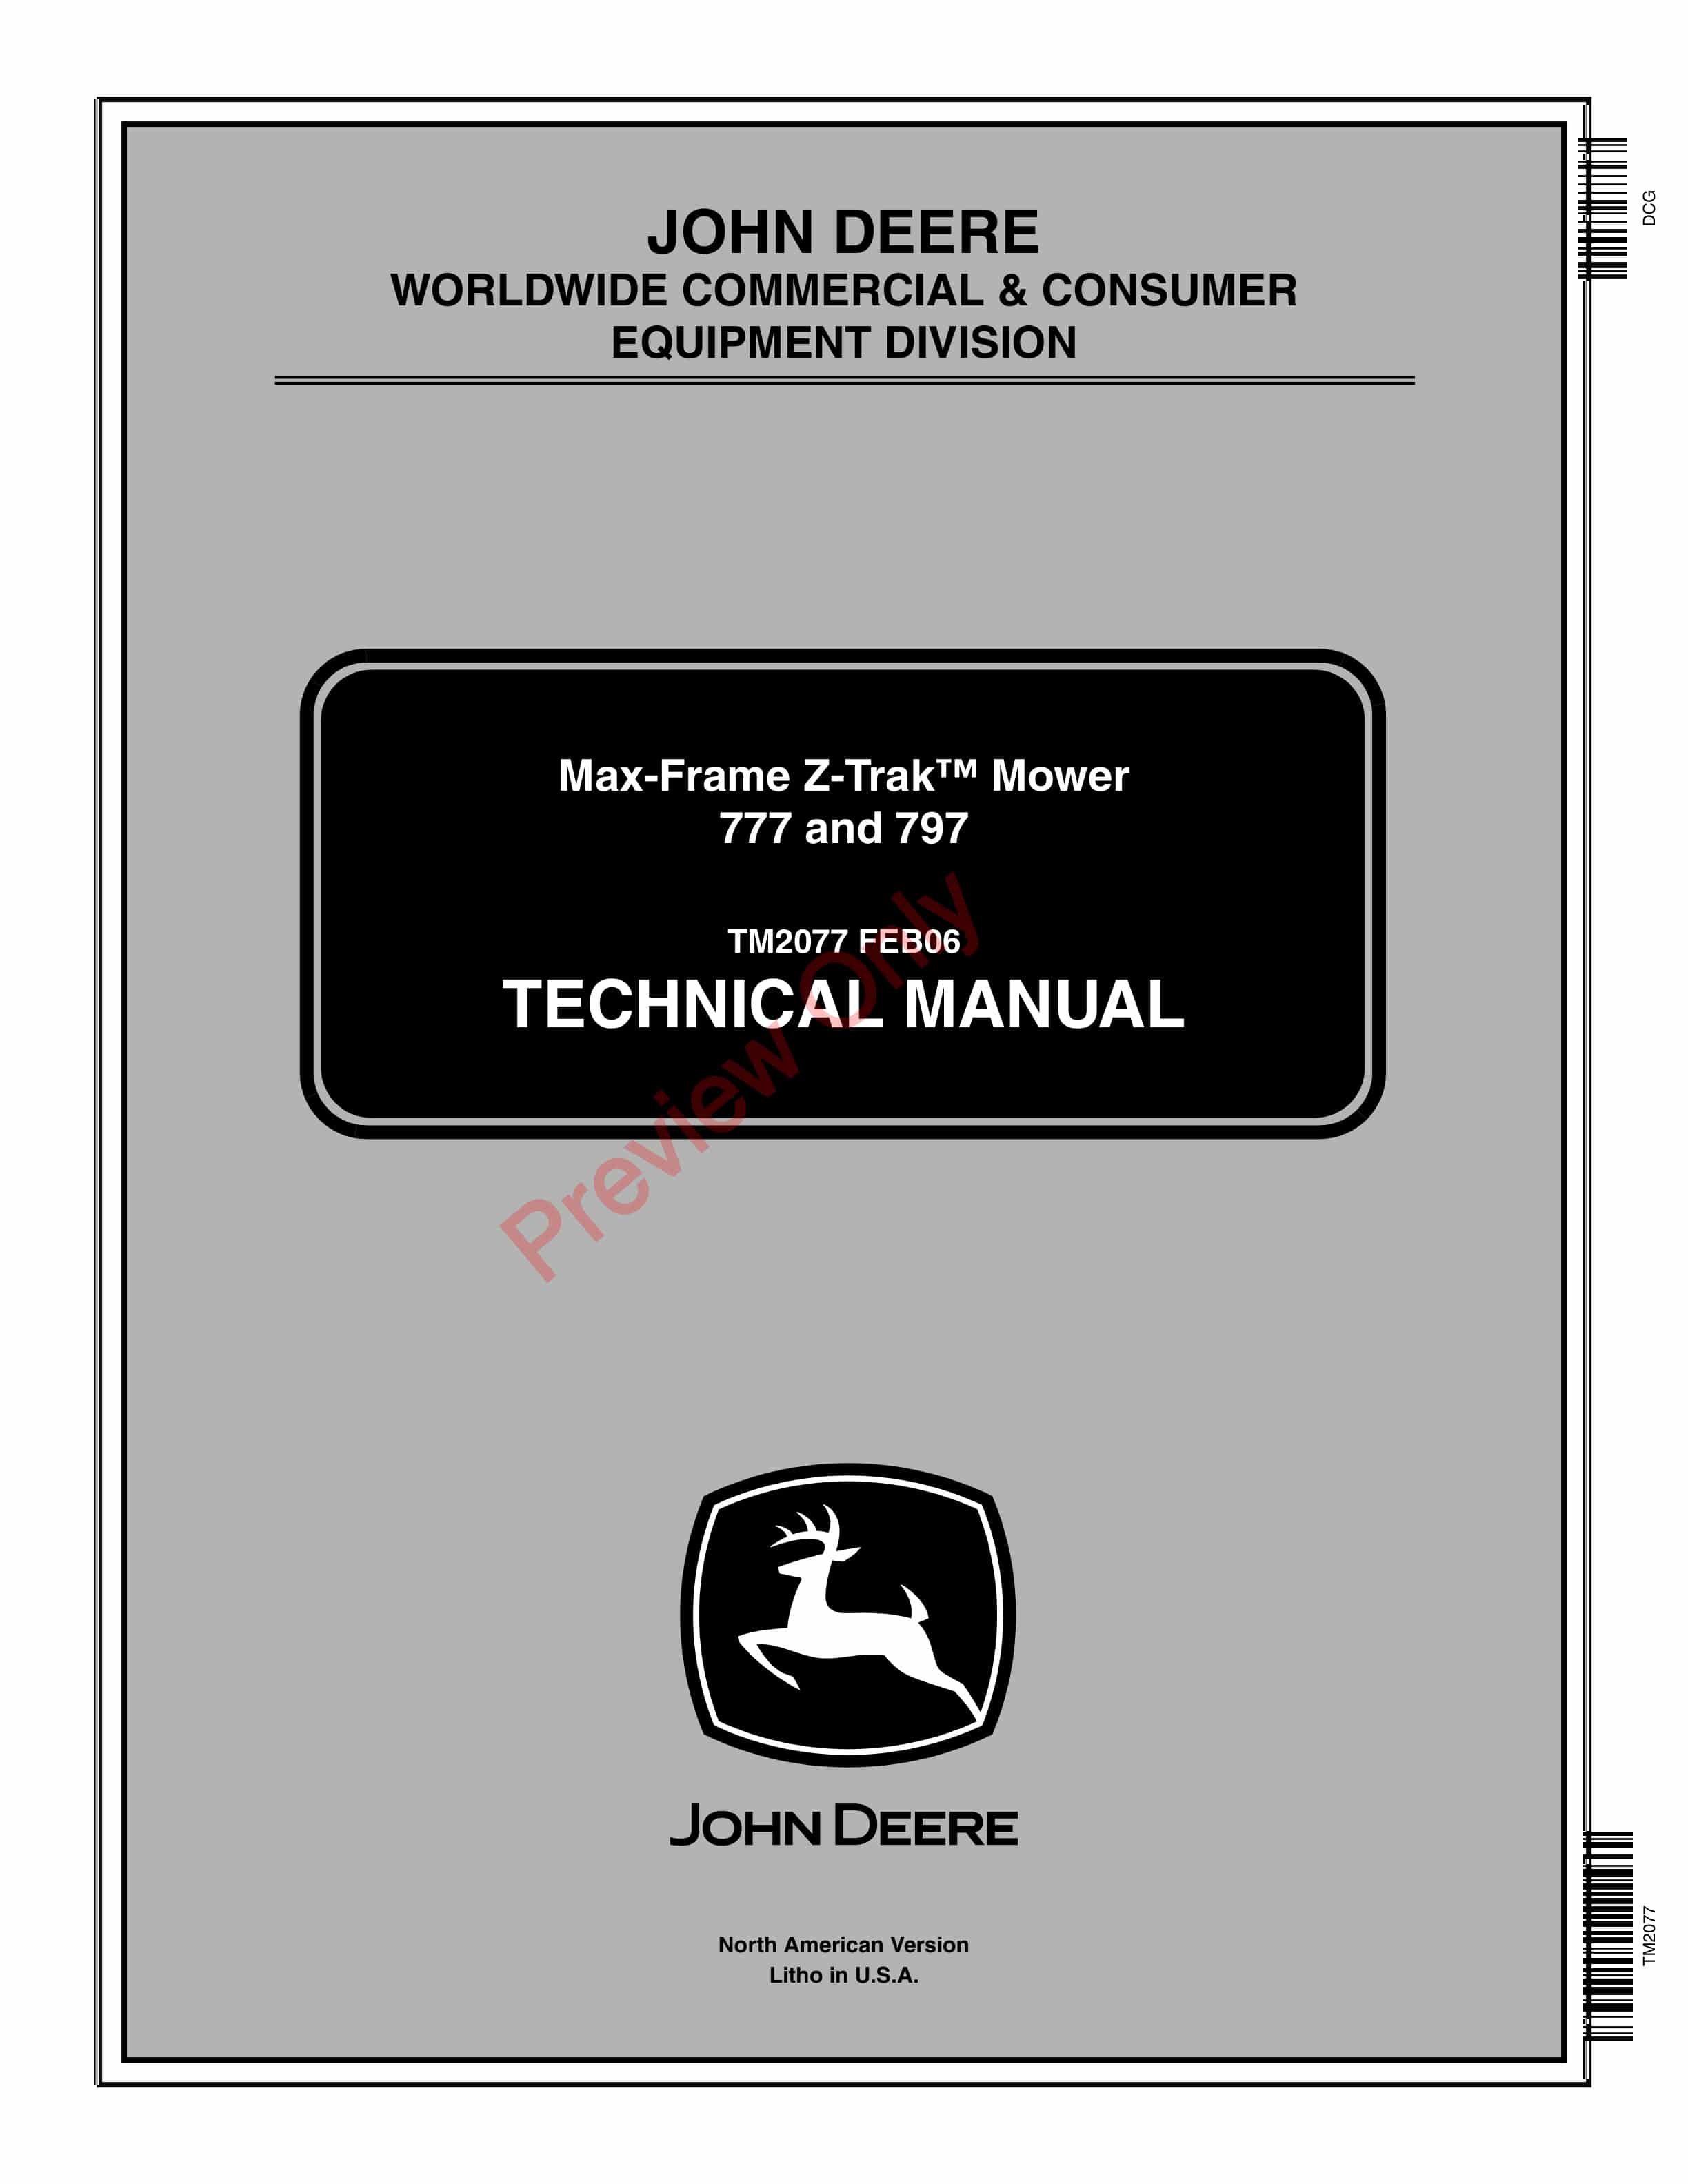 John Deere 777, 797 Max-Frame ZTrak Mowers Technical Manual TM2077 01FEB06-1